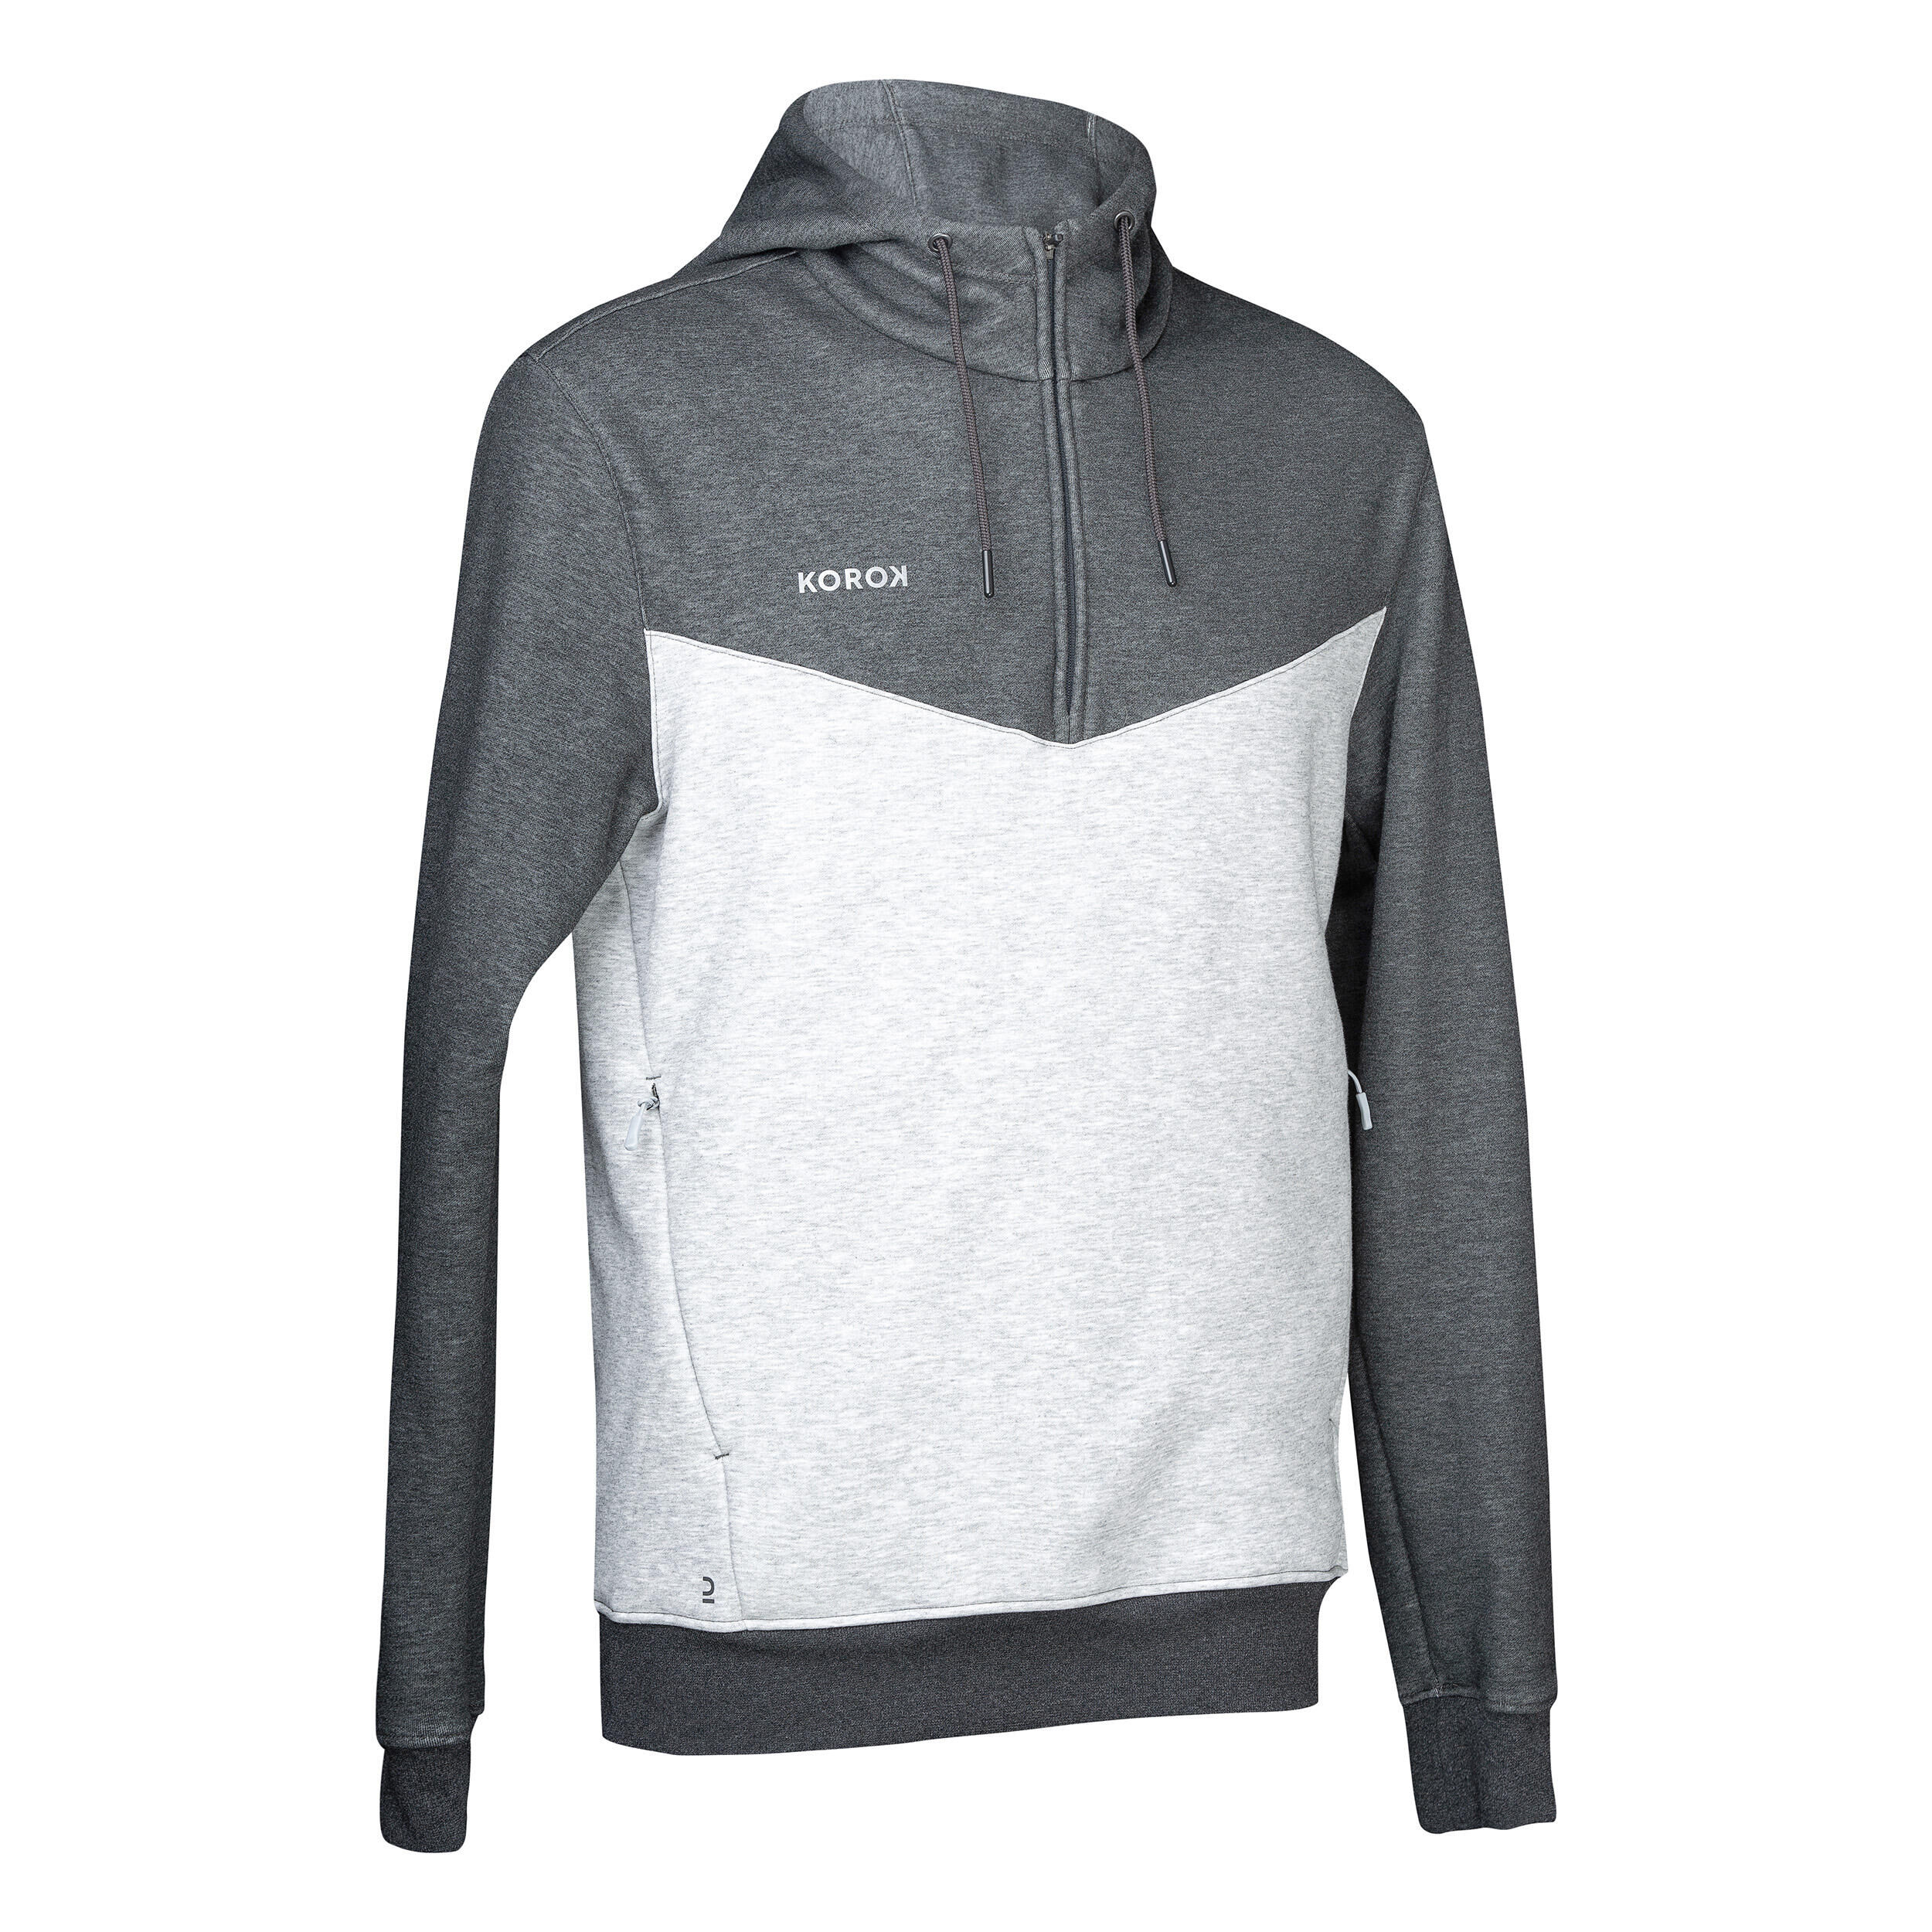 KOROK Men's Field Hockey Sweatshirt FH500 - Grey